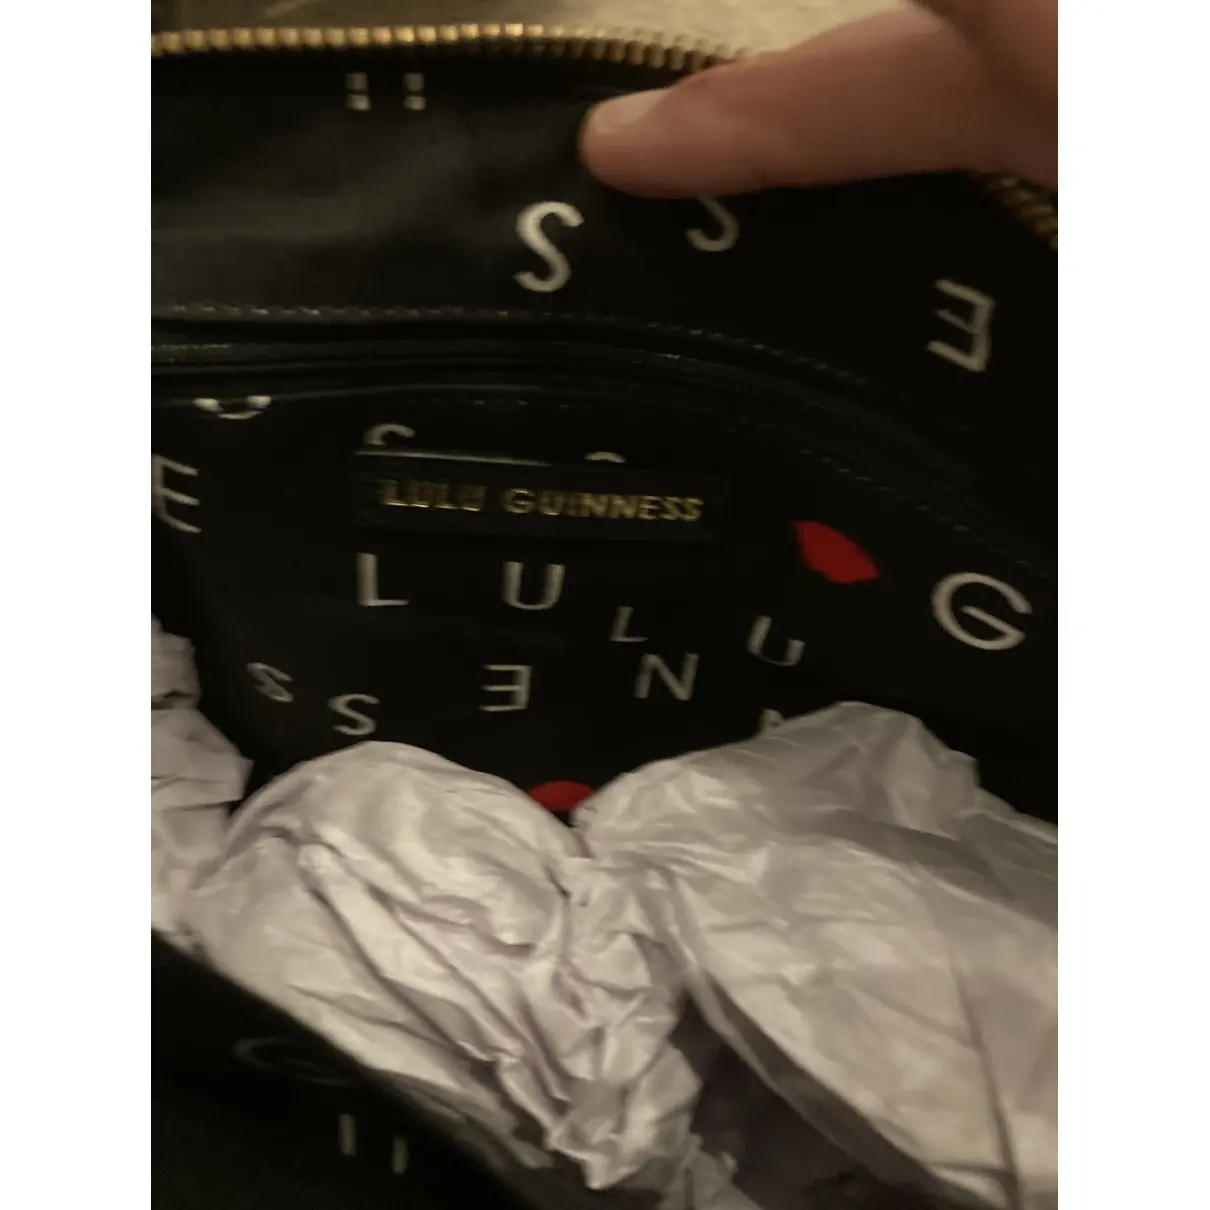 Leather handbag Lulu Guinness